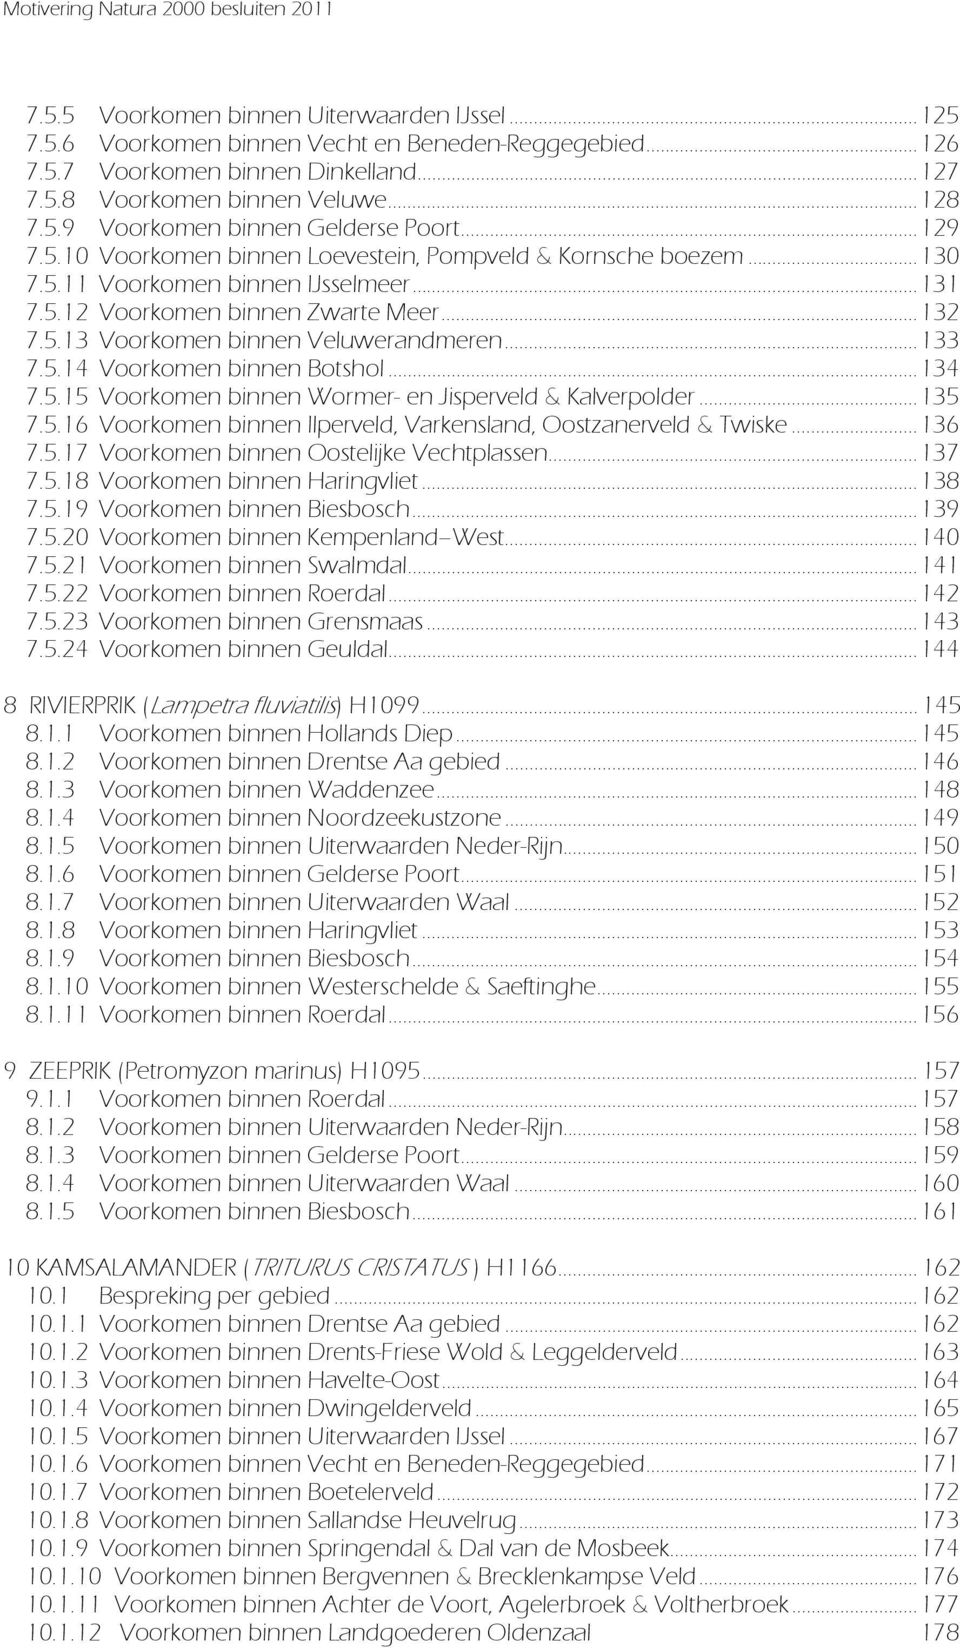 .. 132 7.5.13 Voorkomen binnen Veluwerandmeren... 133 7.5.14 Voorkomen binnen Botshol... 134 7.5.15 Voorkomen binnen Wormer- en Jisperveld & Kalverpolder... 135 7.5.16 Voorkomen binnen Ilperveld, Varkensland, Oostzanerveld & Twiske.